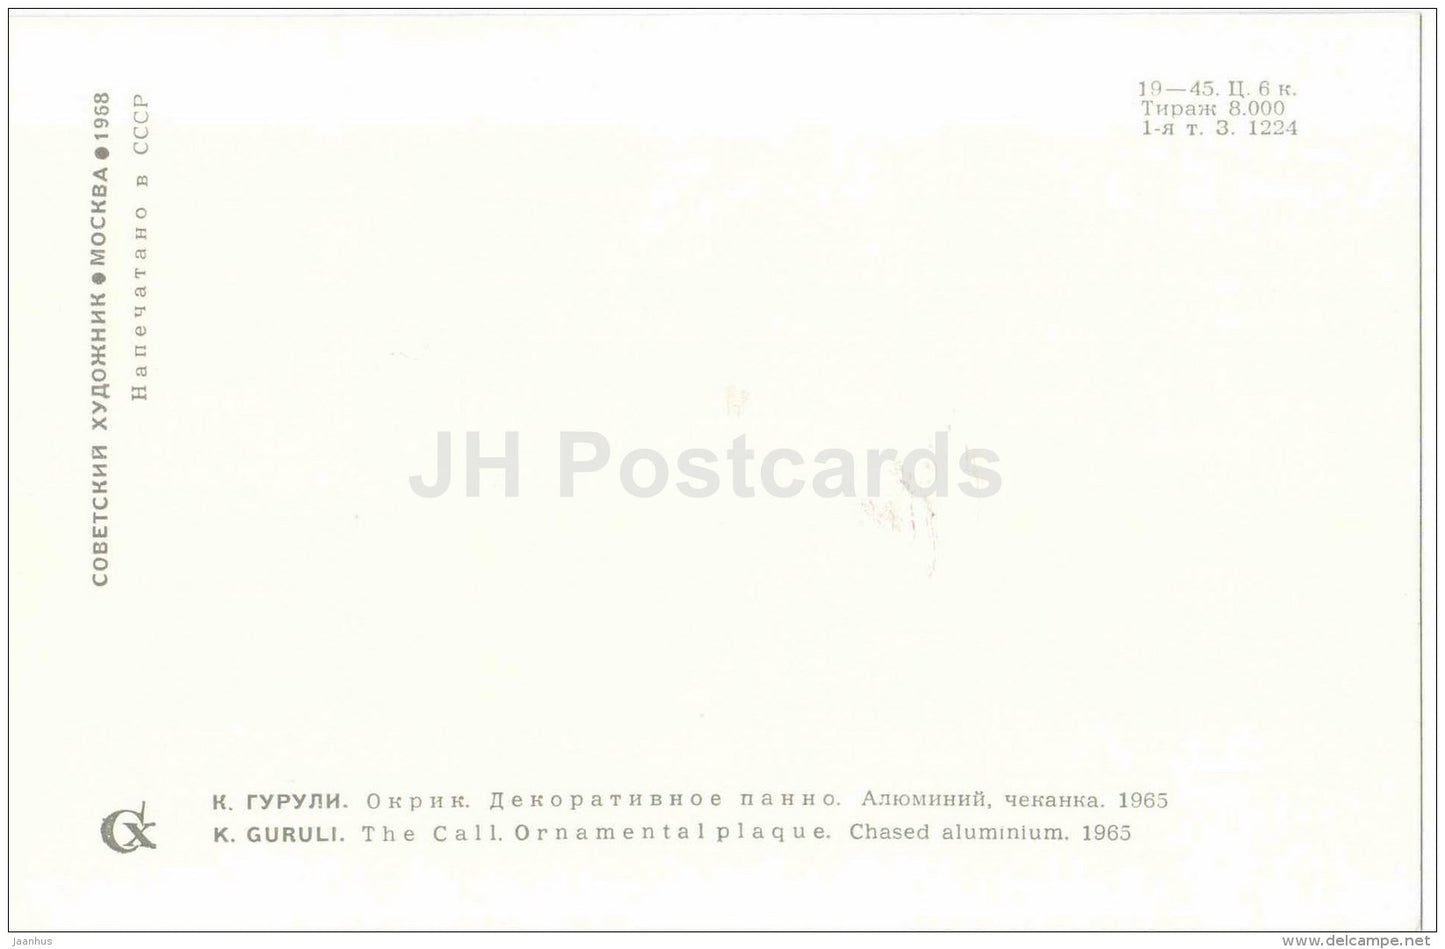 The Call by K. Guruli - ornamental plaque - Stamping and Ceramics of Georgia - 1968 - Georgia USSR - unused - JH Postcards